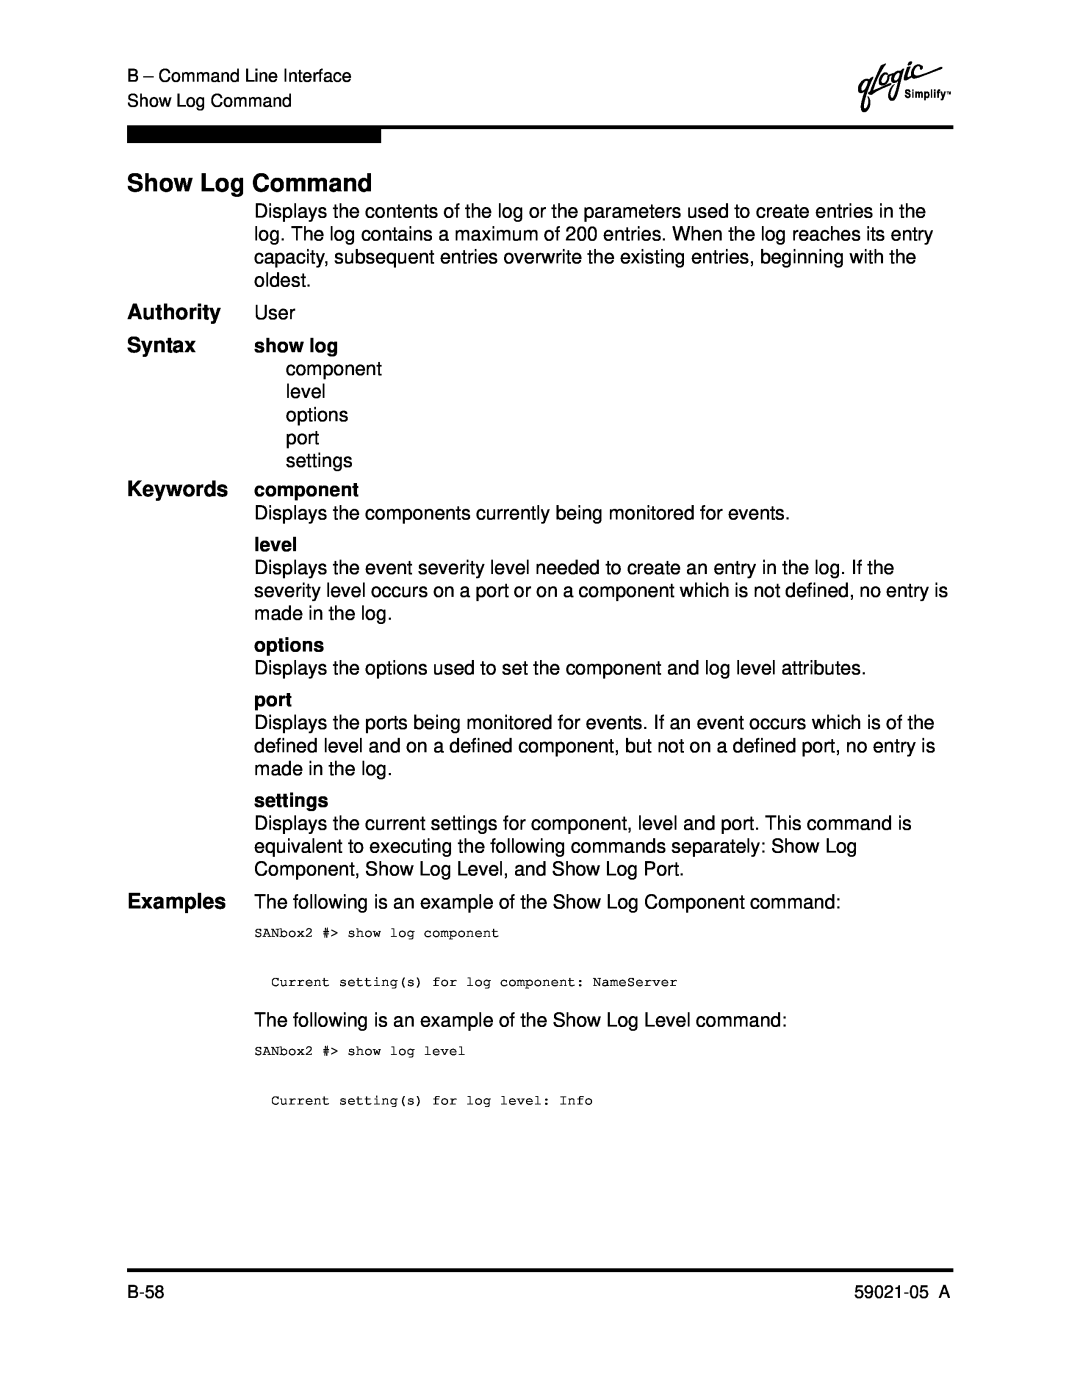 Q-Logic 59021-05 manual Show Log Command, Keywords component, Authority User, level, options, port, settings 